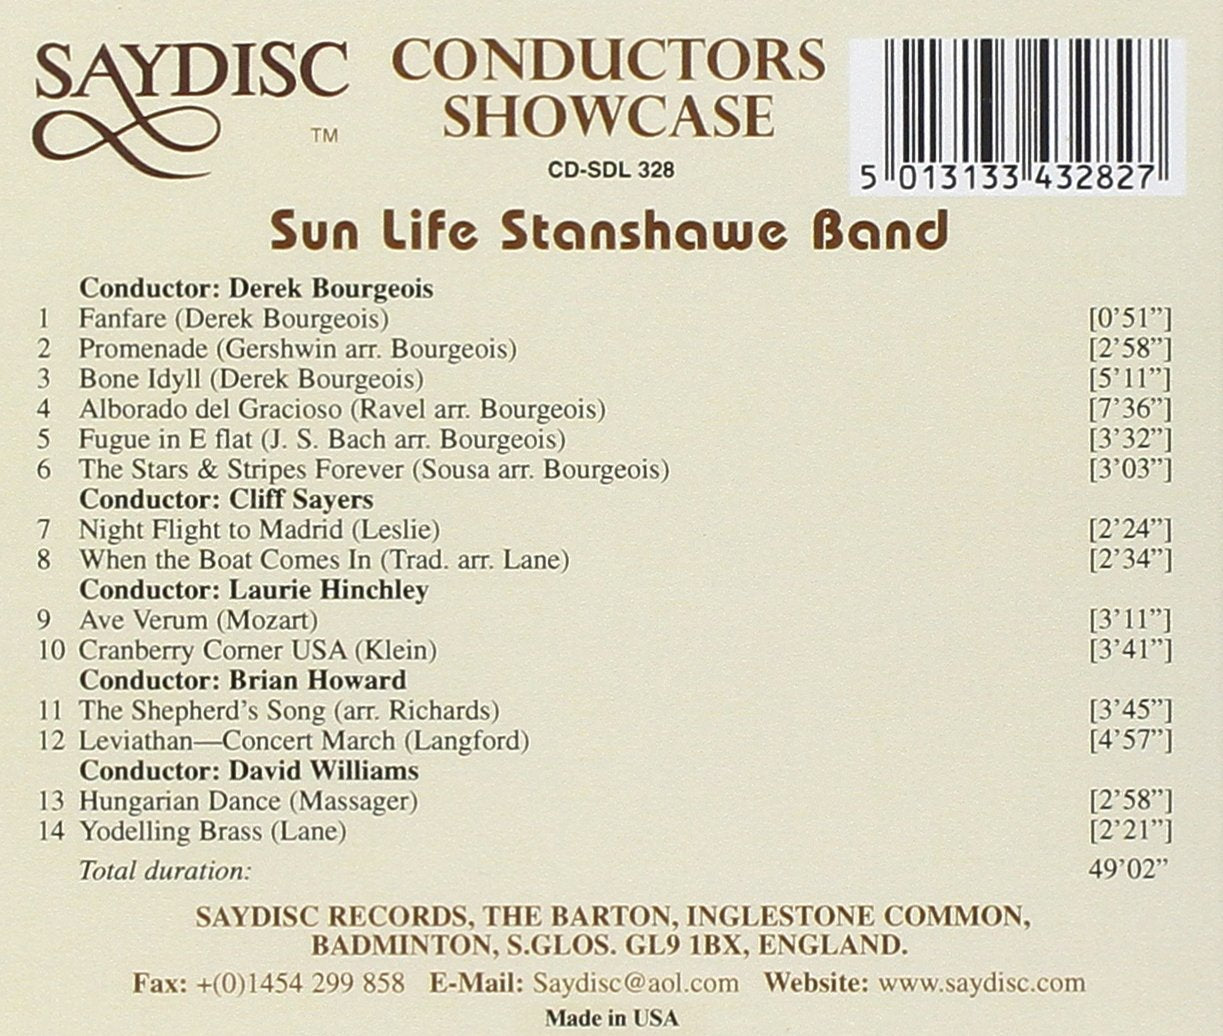 Conductors Showcase - Sun Life Stanshawe Band